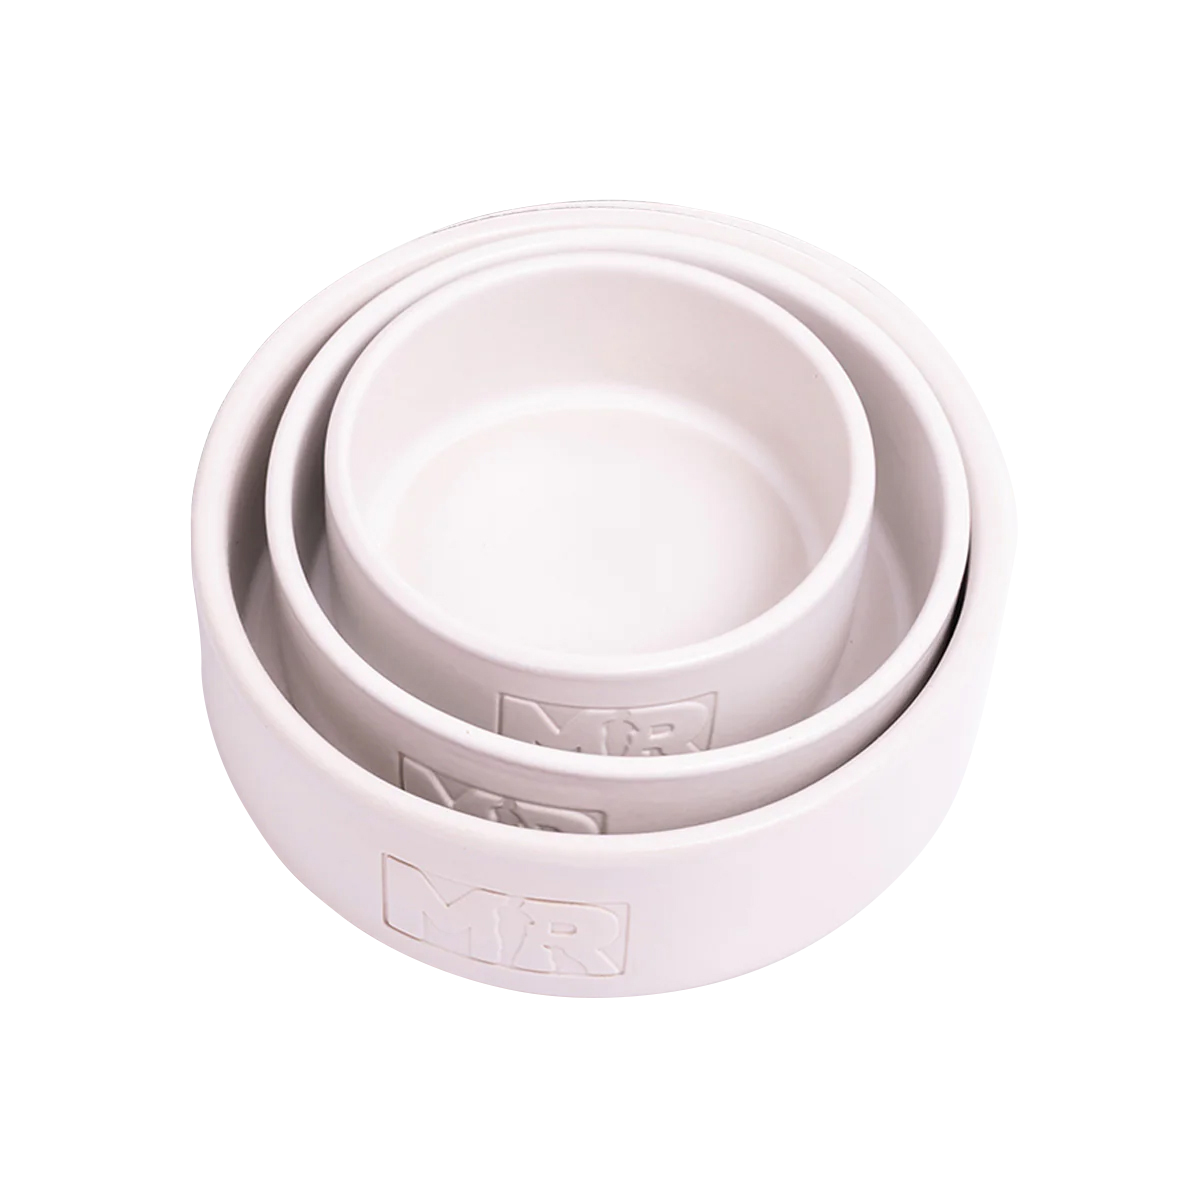 Keramik Napf NAPPA - Wasser-/Futternapf in Cream